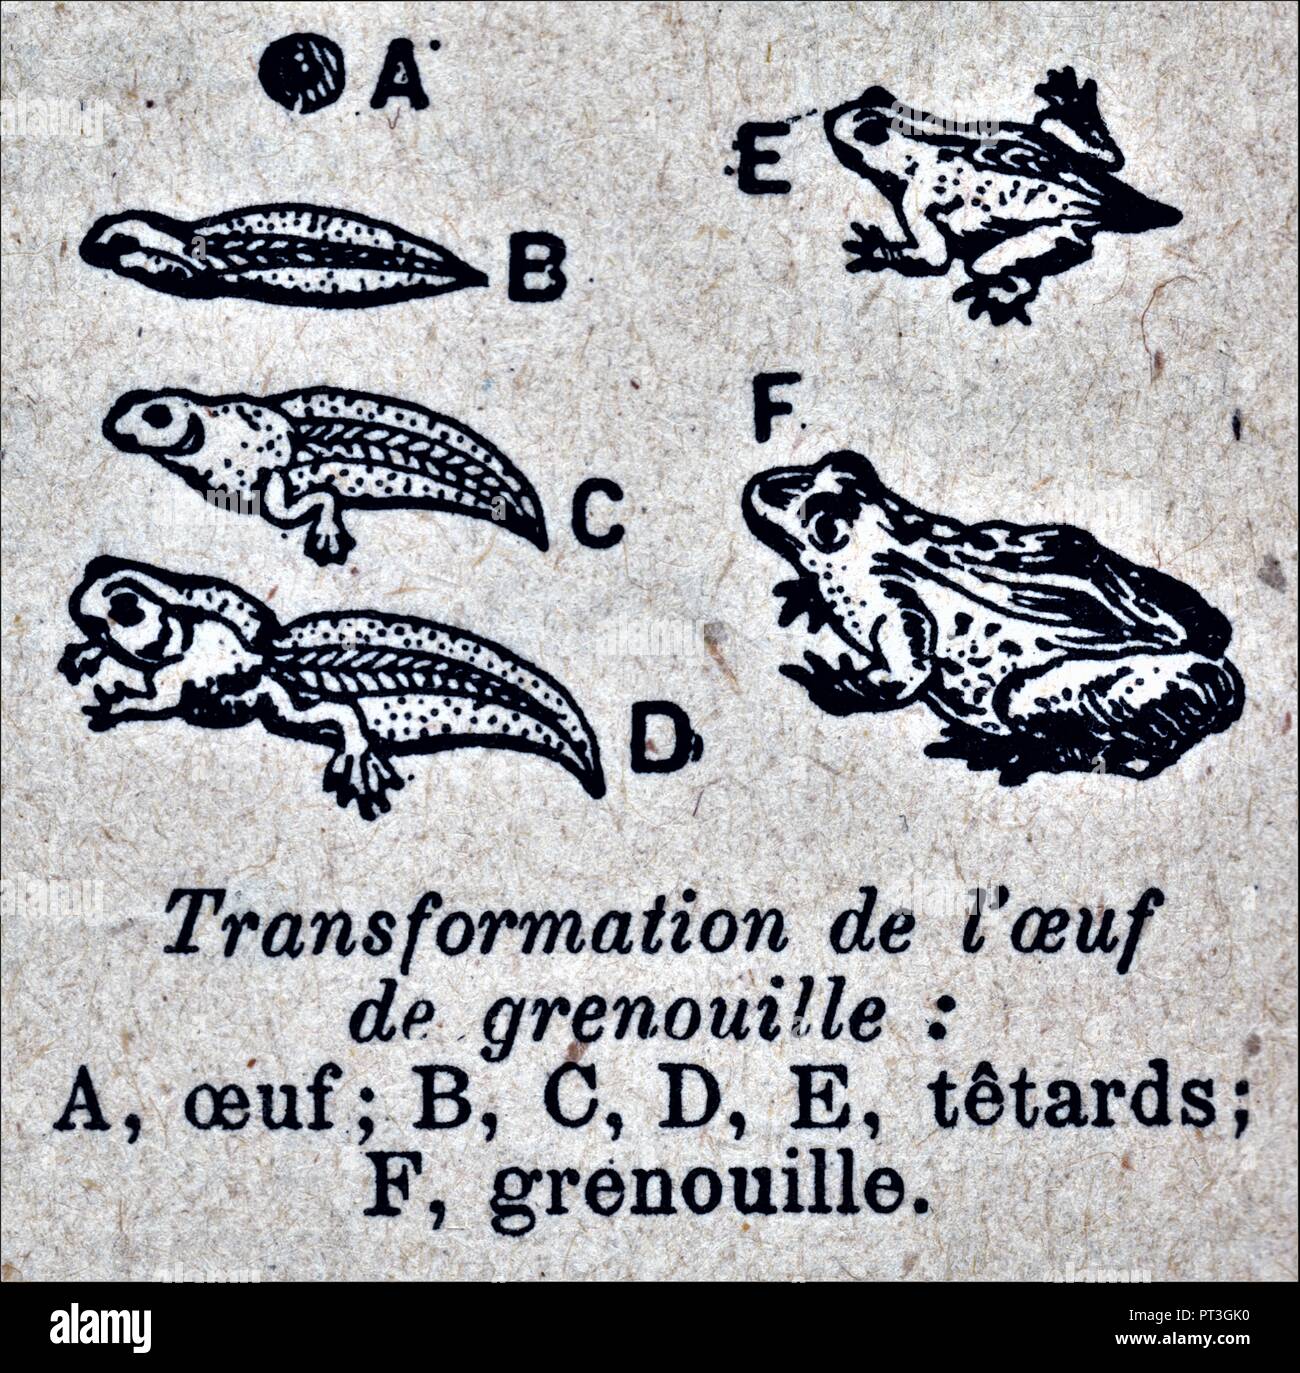 TRANSFORMATION DE L'OEUF DE GRENOUILLE. Foto Stock